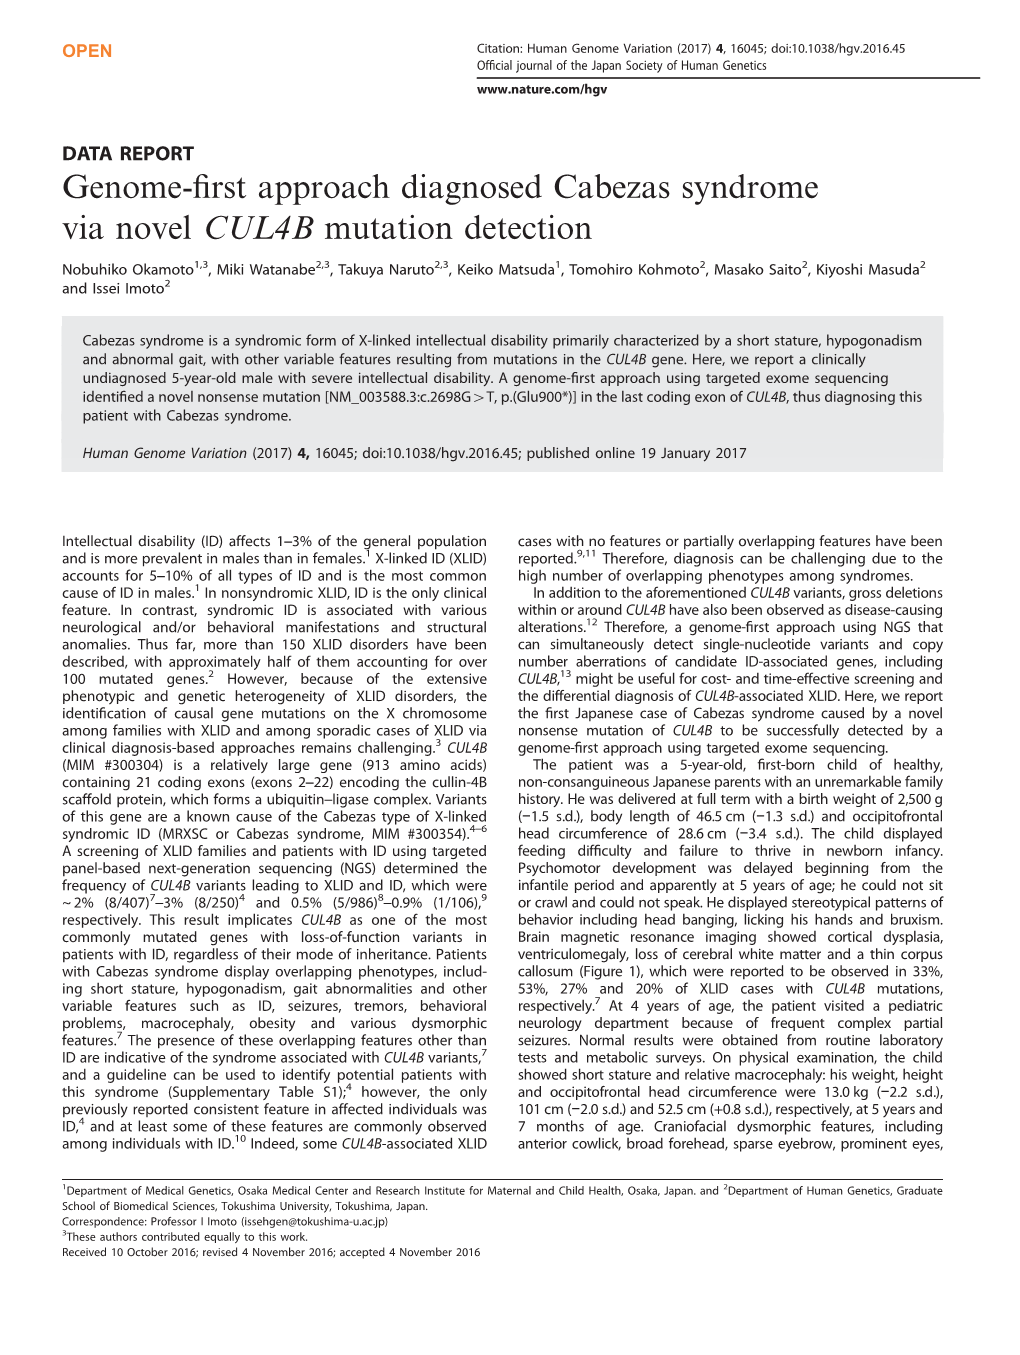 Genome-First Approach Diagnosed Cabezas Syndrome Via Novel